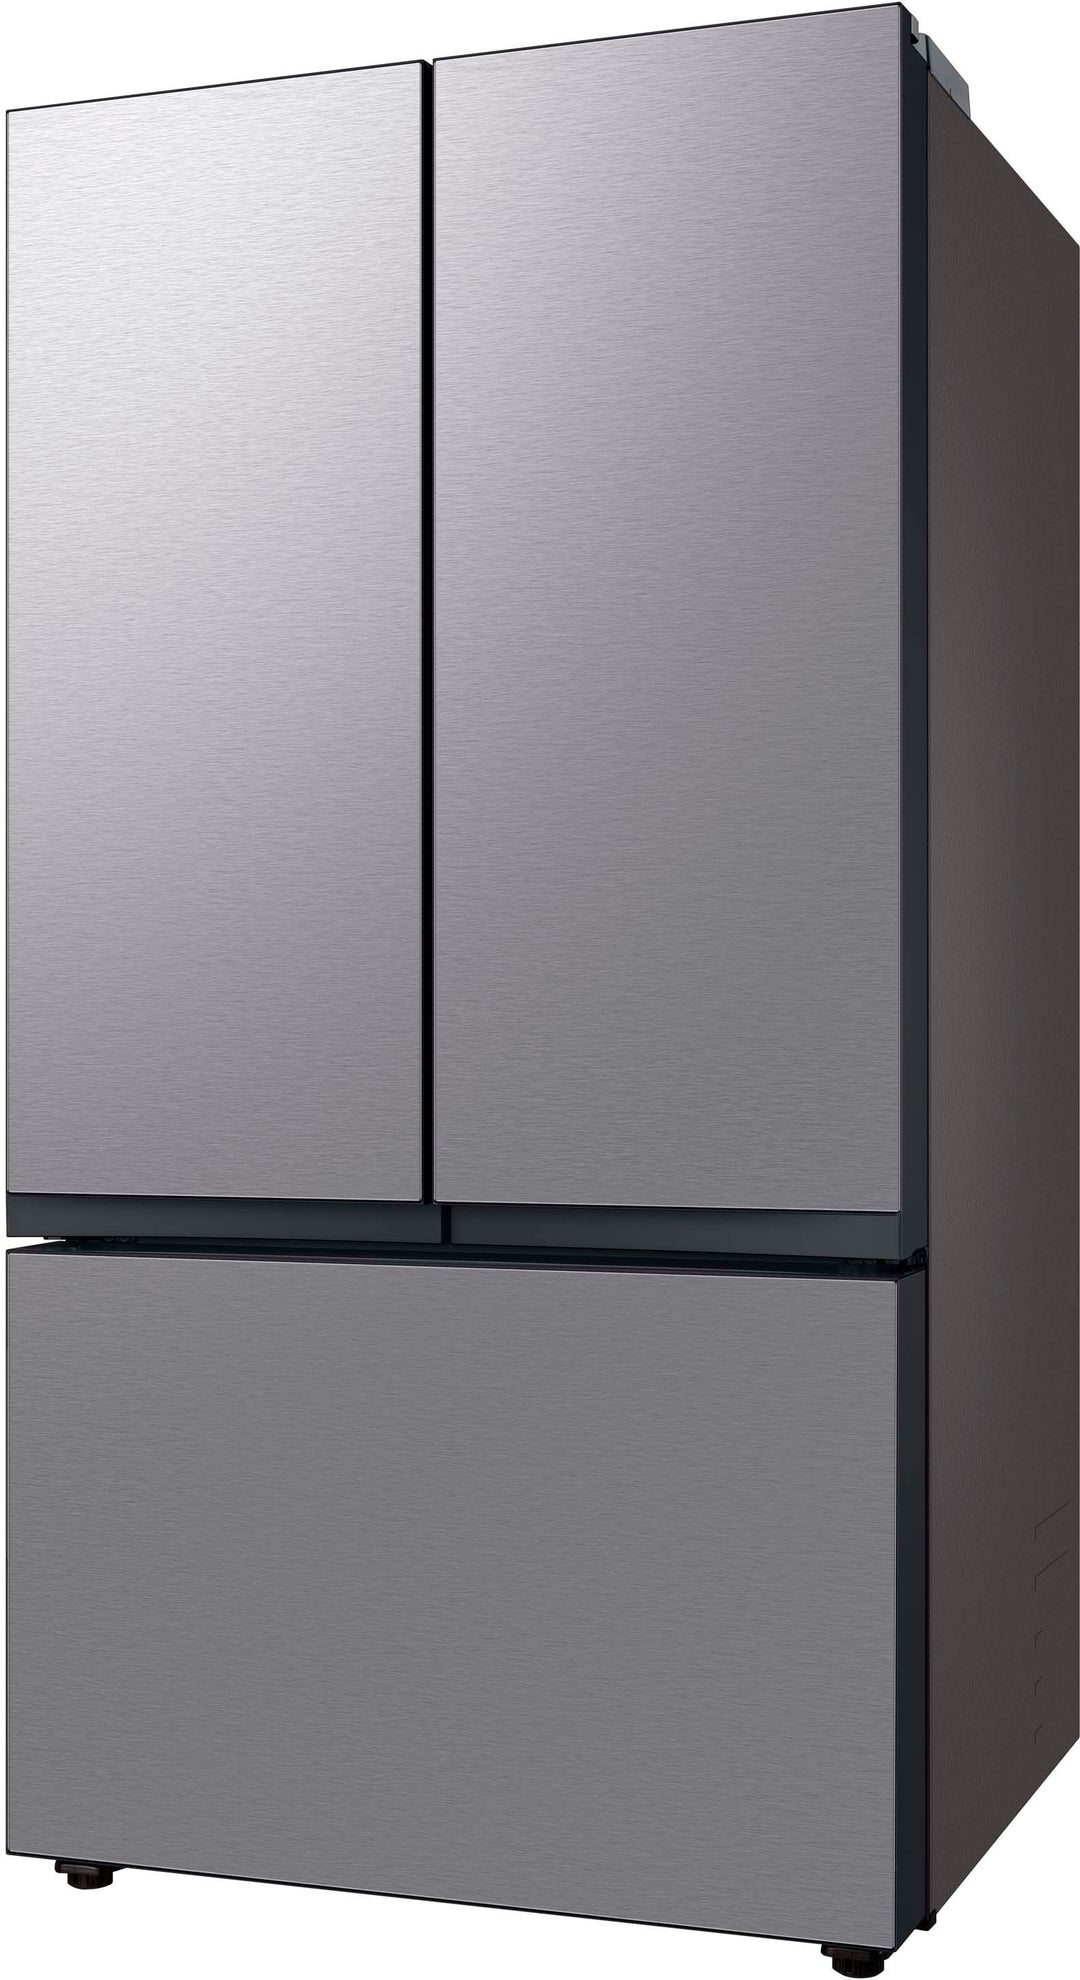 Samsung - Bespoke 30 cu. ft 3-Door French Door Refrigerator with AutoFill Water Pitcher - Stainless steel_13